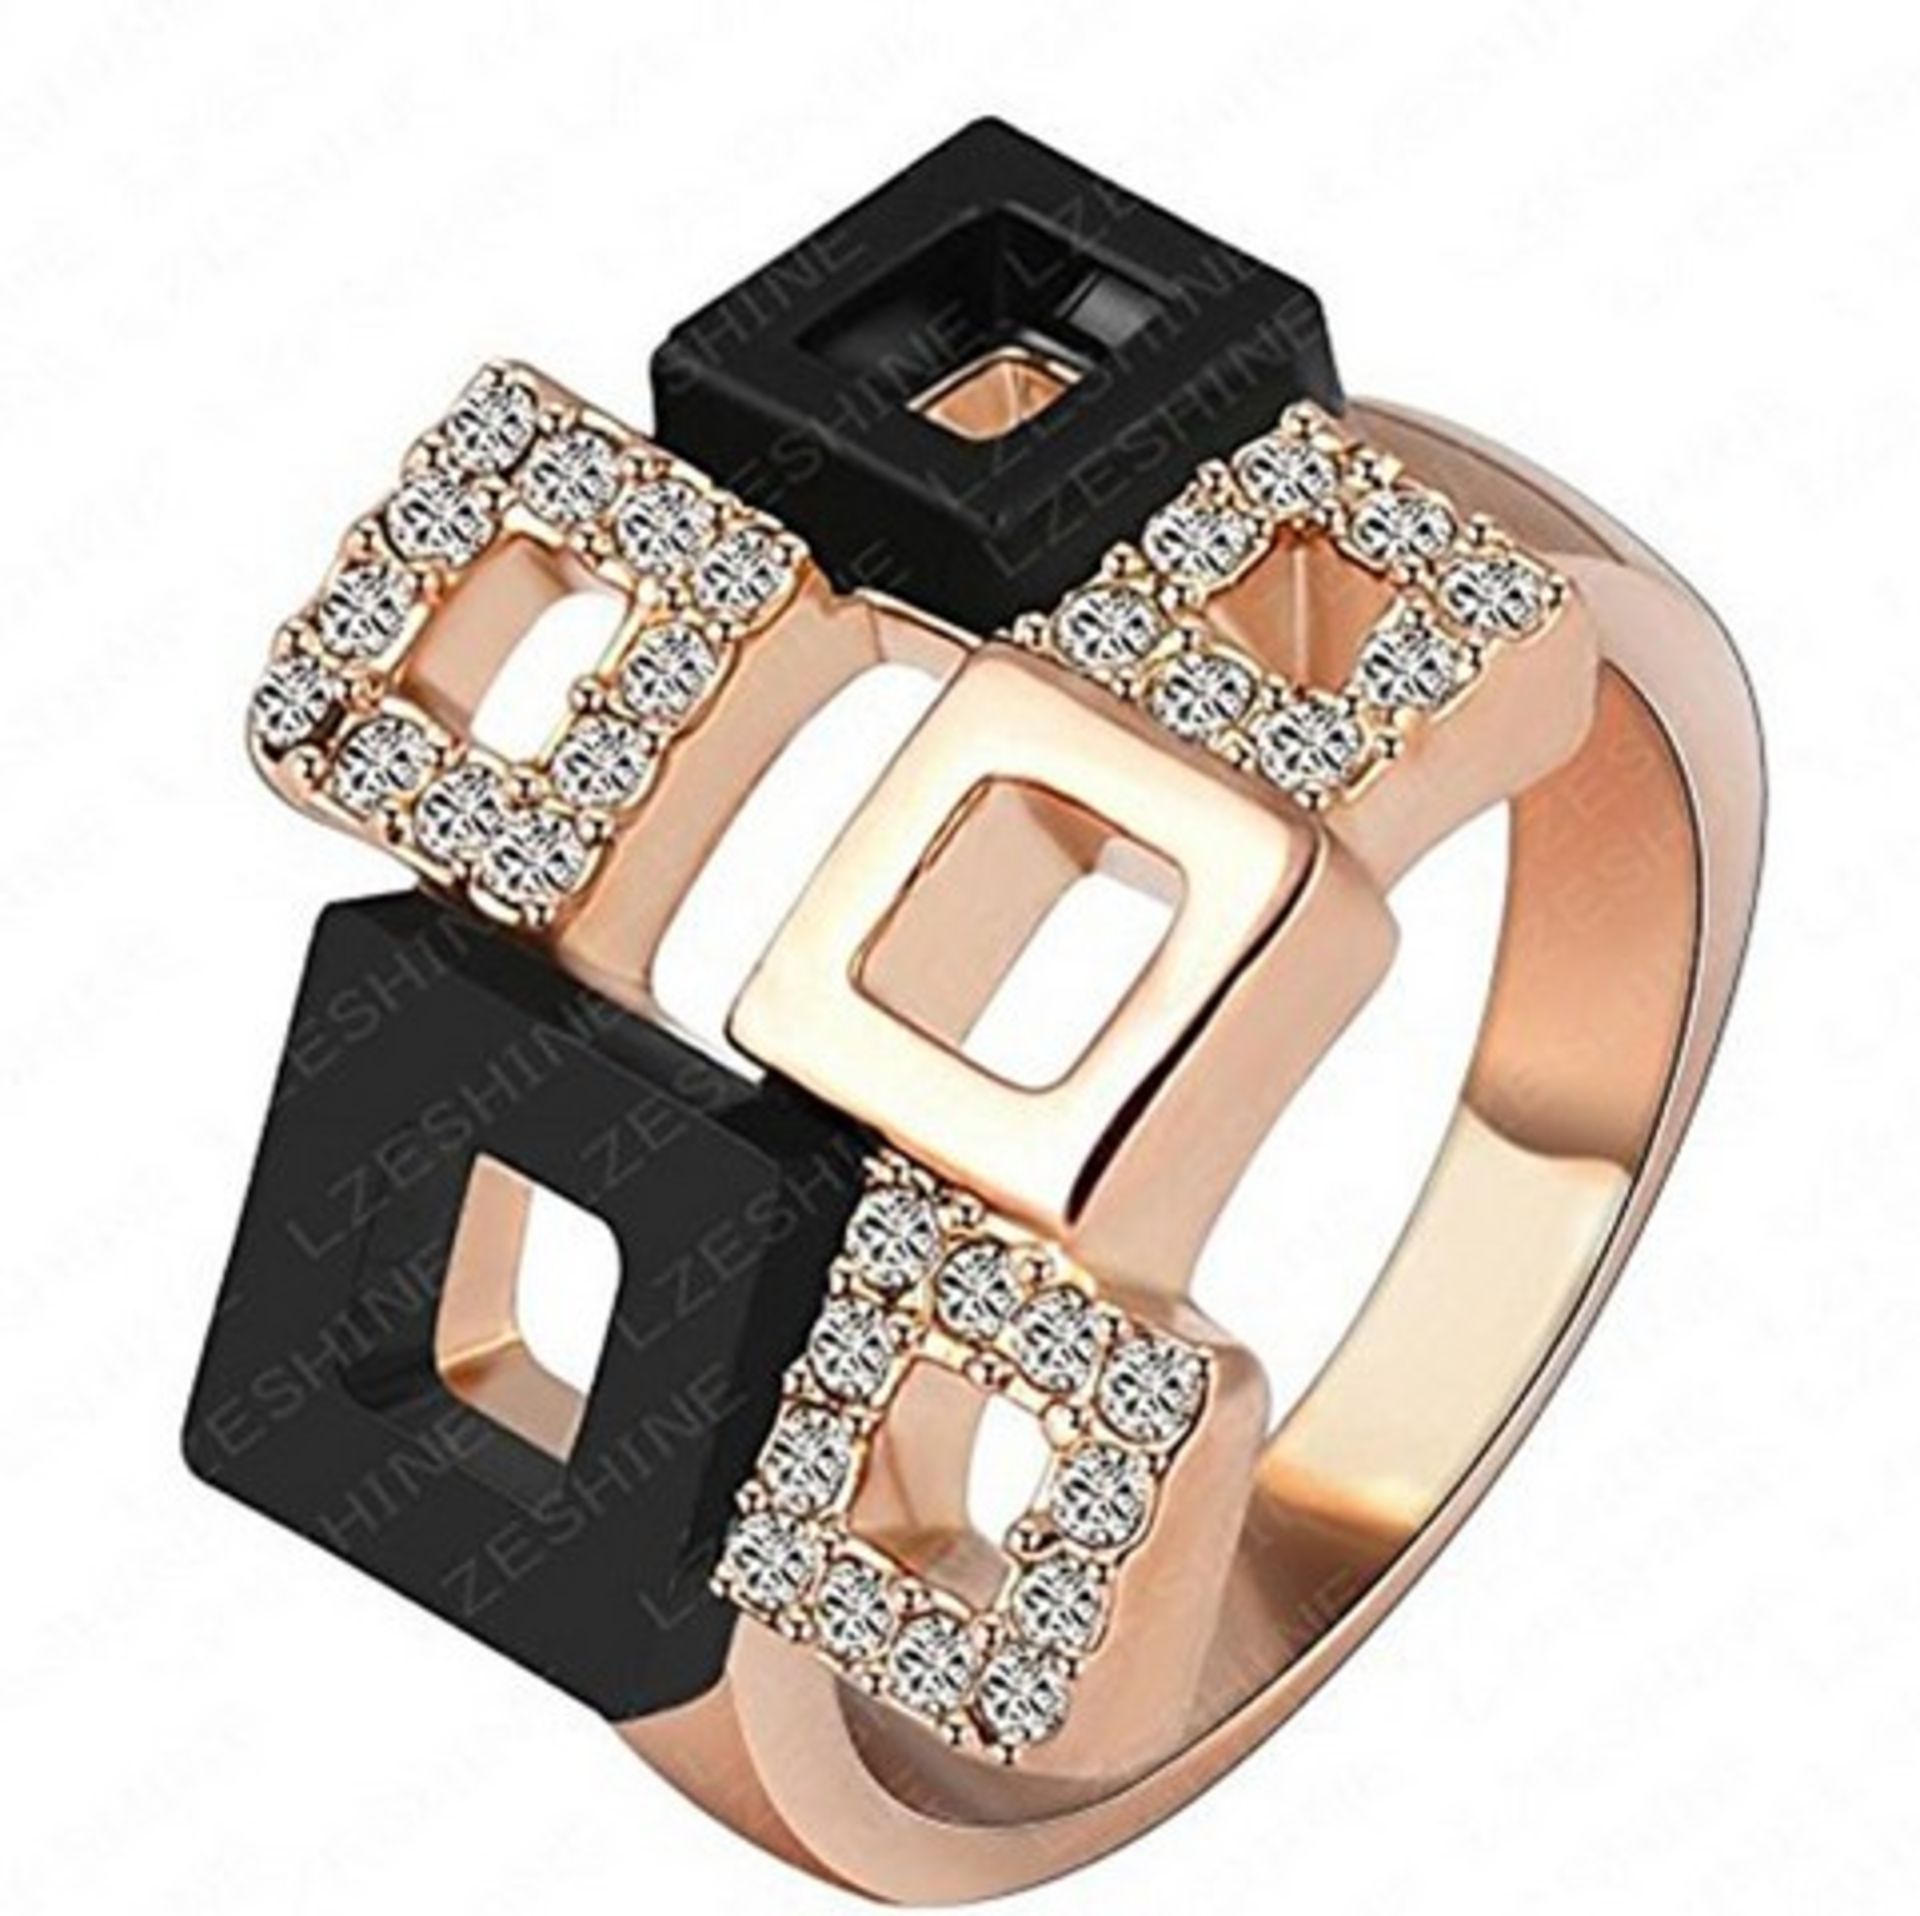 + VAT Brand New Rose Colour Modern Square Design Ring with White Stones